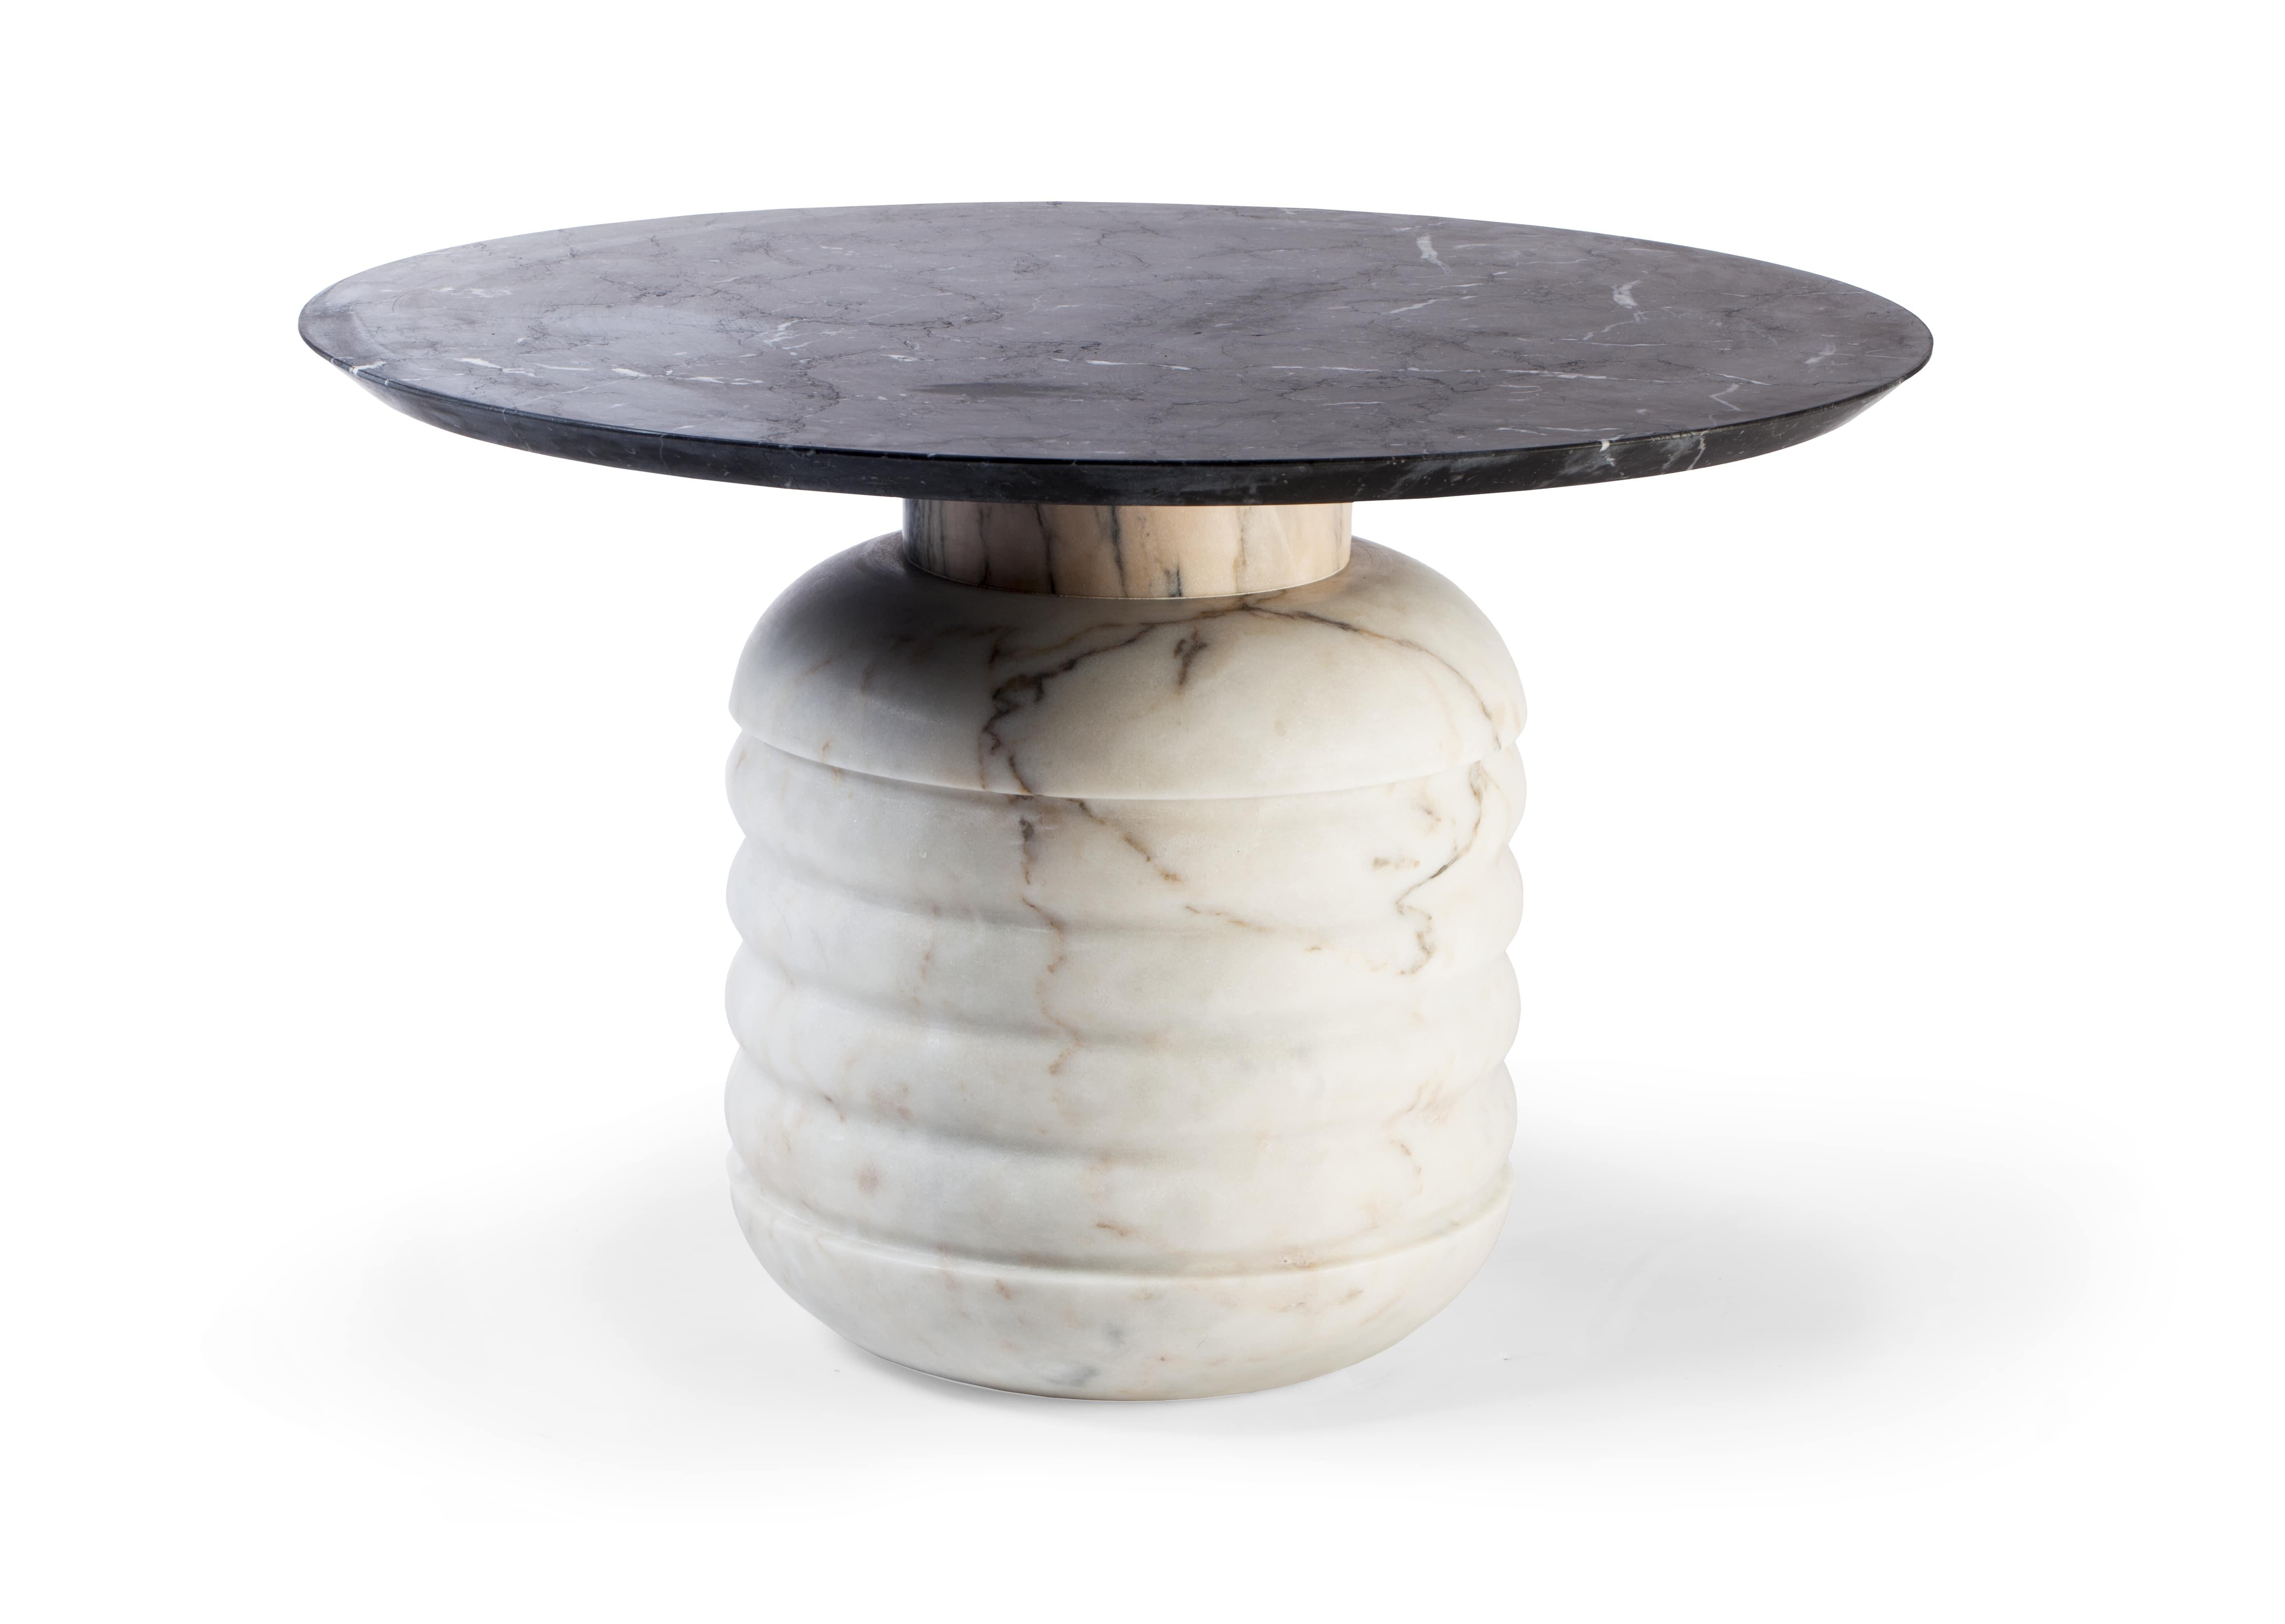 Marble contemporary Jean coffee table
Dimensions: H 38 cm x Ø 60cm
Materials: top: estremoz, nero marquina, verde guatemala, estremoz
 Middle part: estremoz, nero marquina, estremoz 
 Base: estremoz marble.





